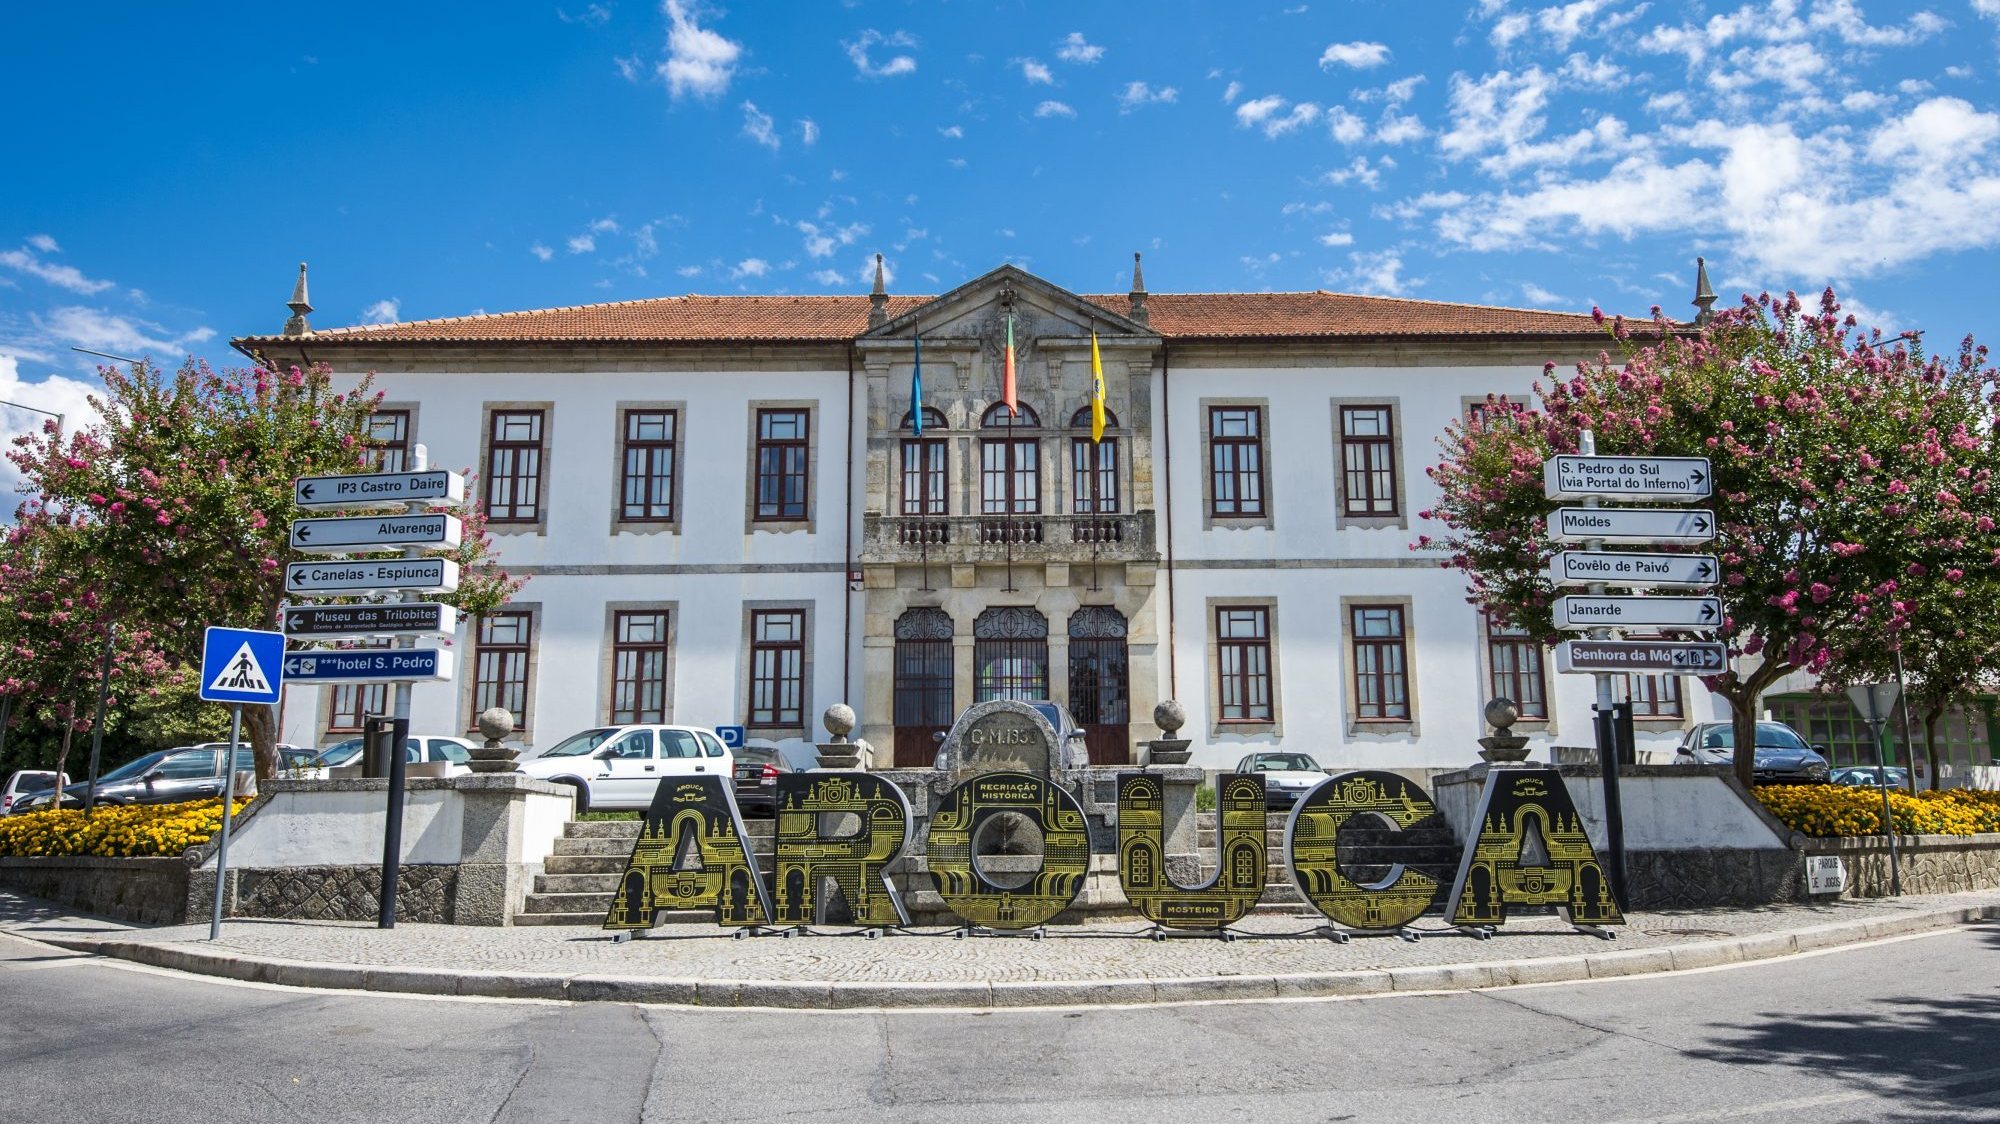 O início do julgamento está marcado para as 9h30 no Tribunal de Santa Maria da Feira, no distrito de Aveiro